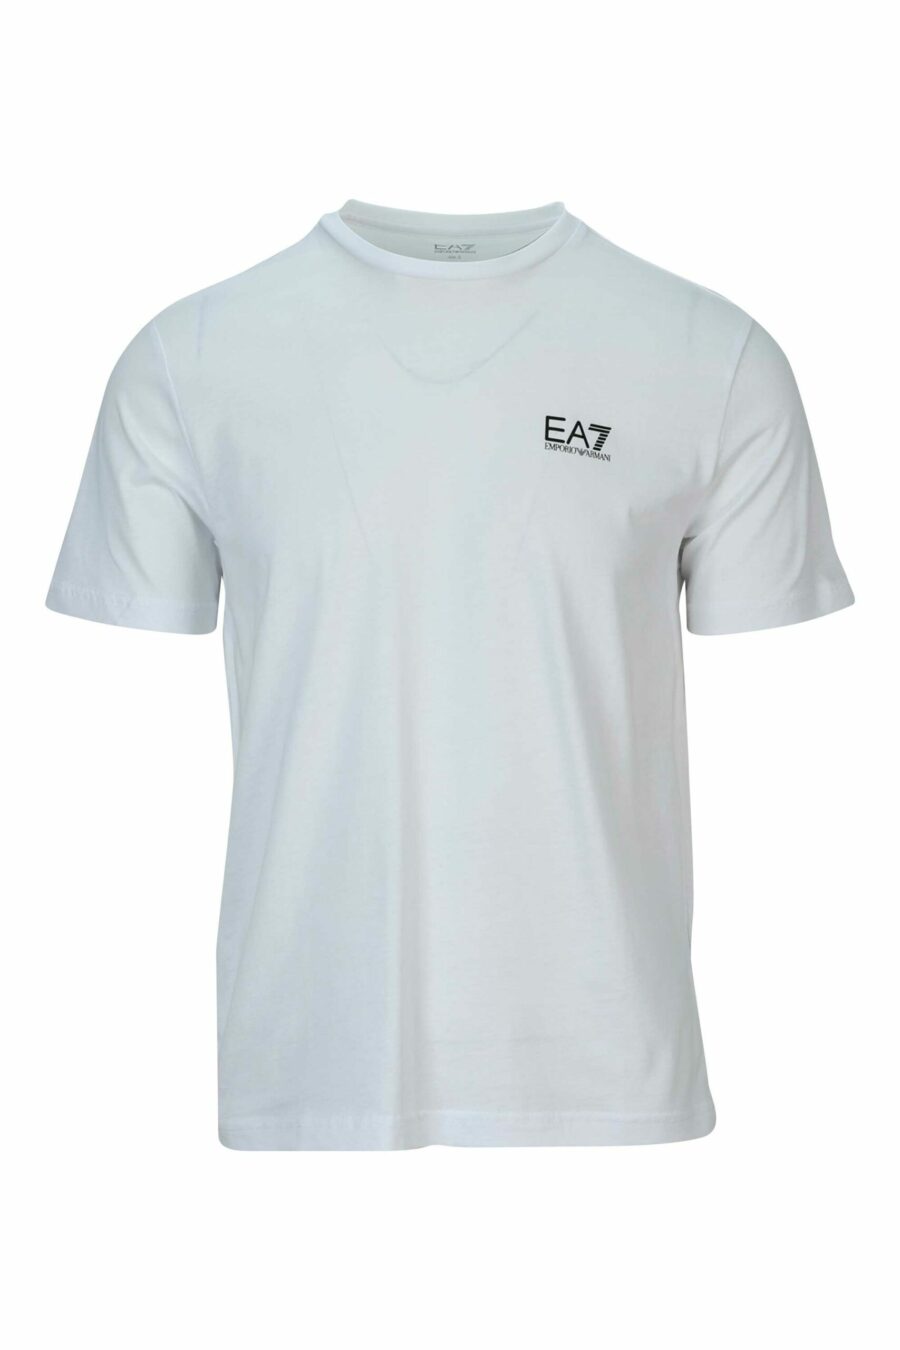 Camiseta blanca con maxilogo "lux identity" vertical detrás - 8058947452569 scaled